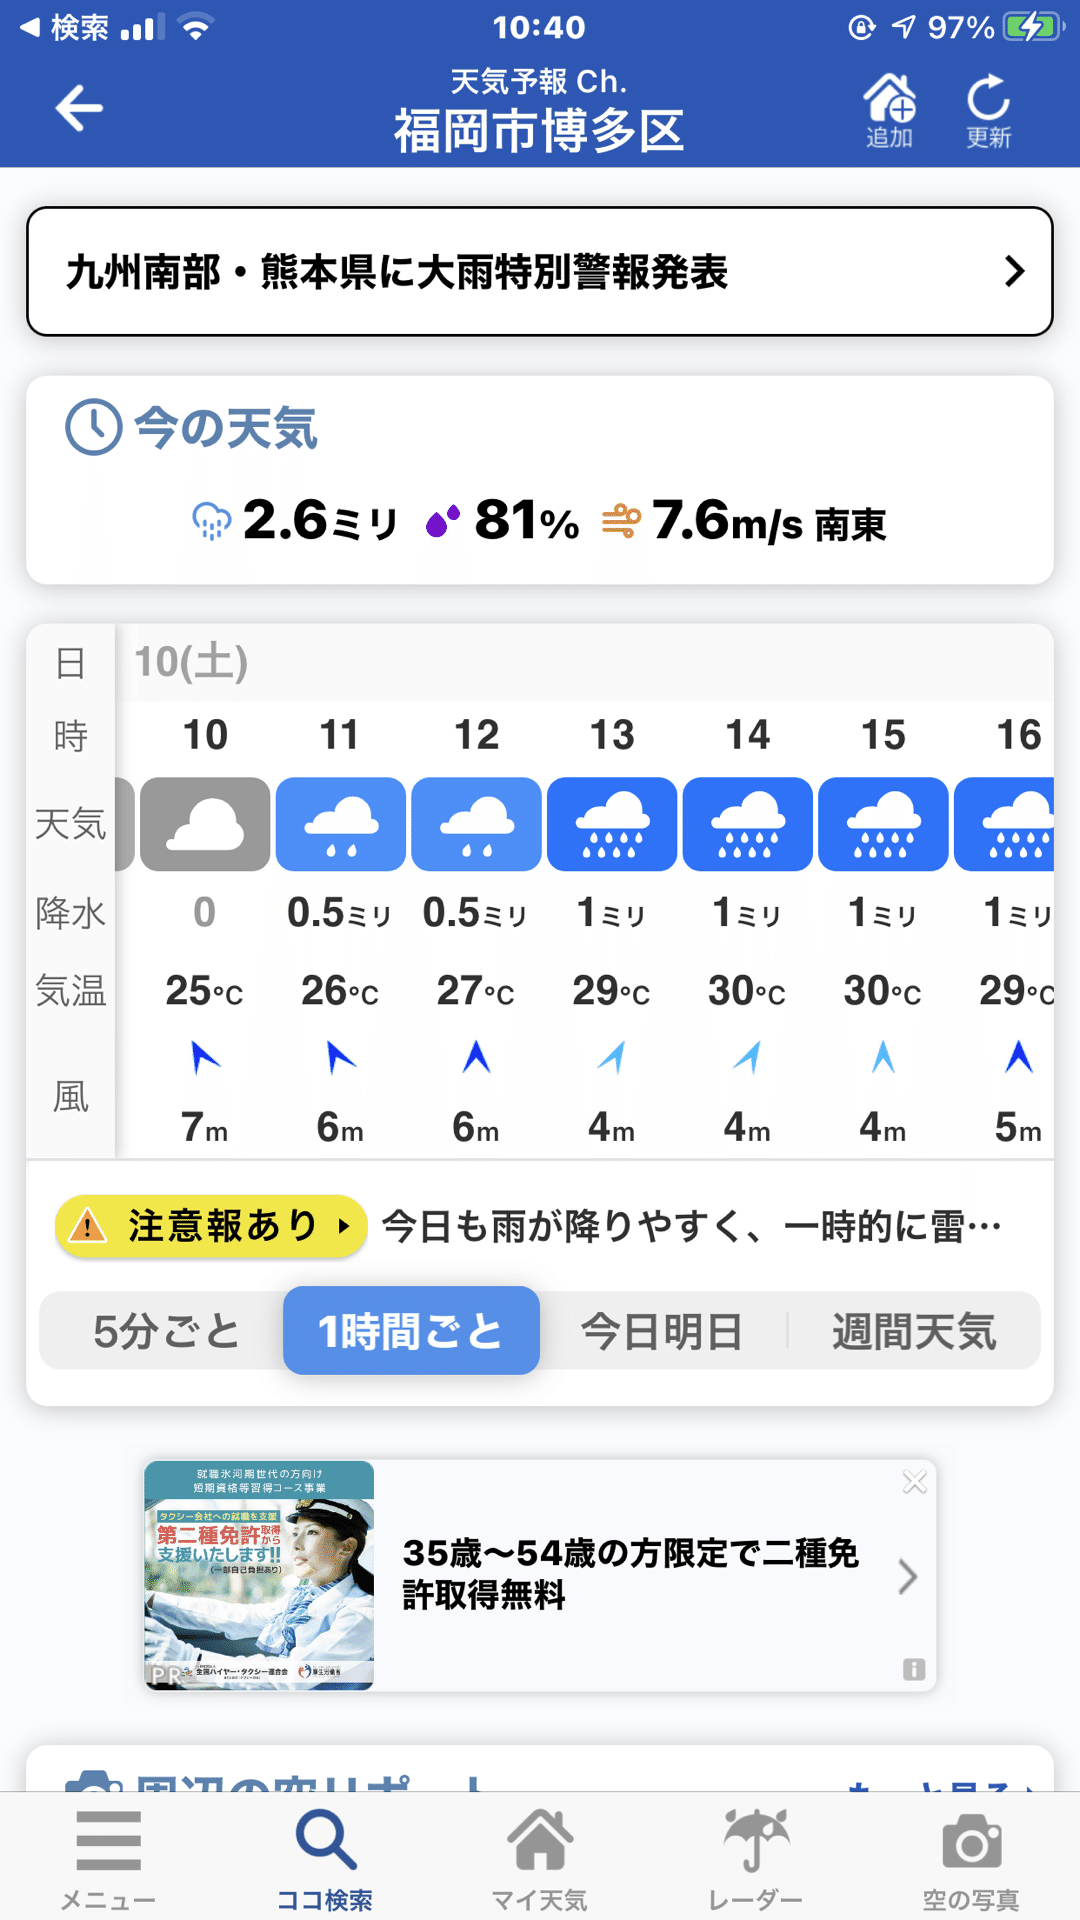 博多の天気予報 7月10日 水野立郎 Note